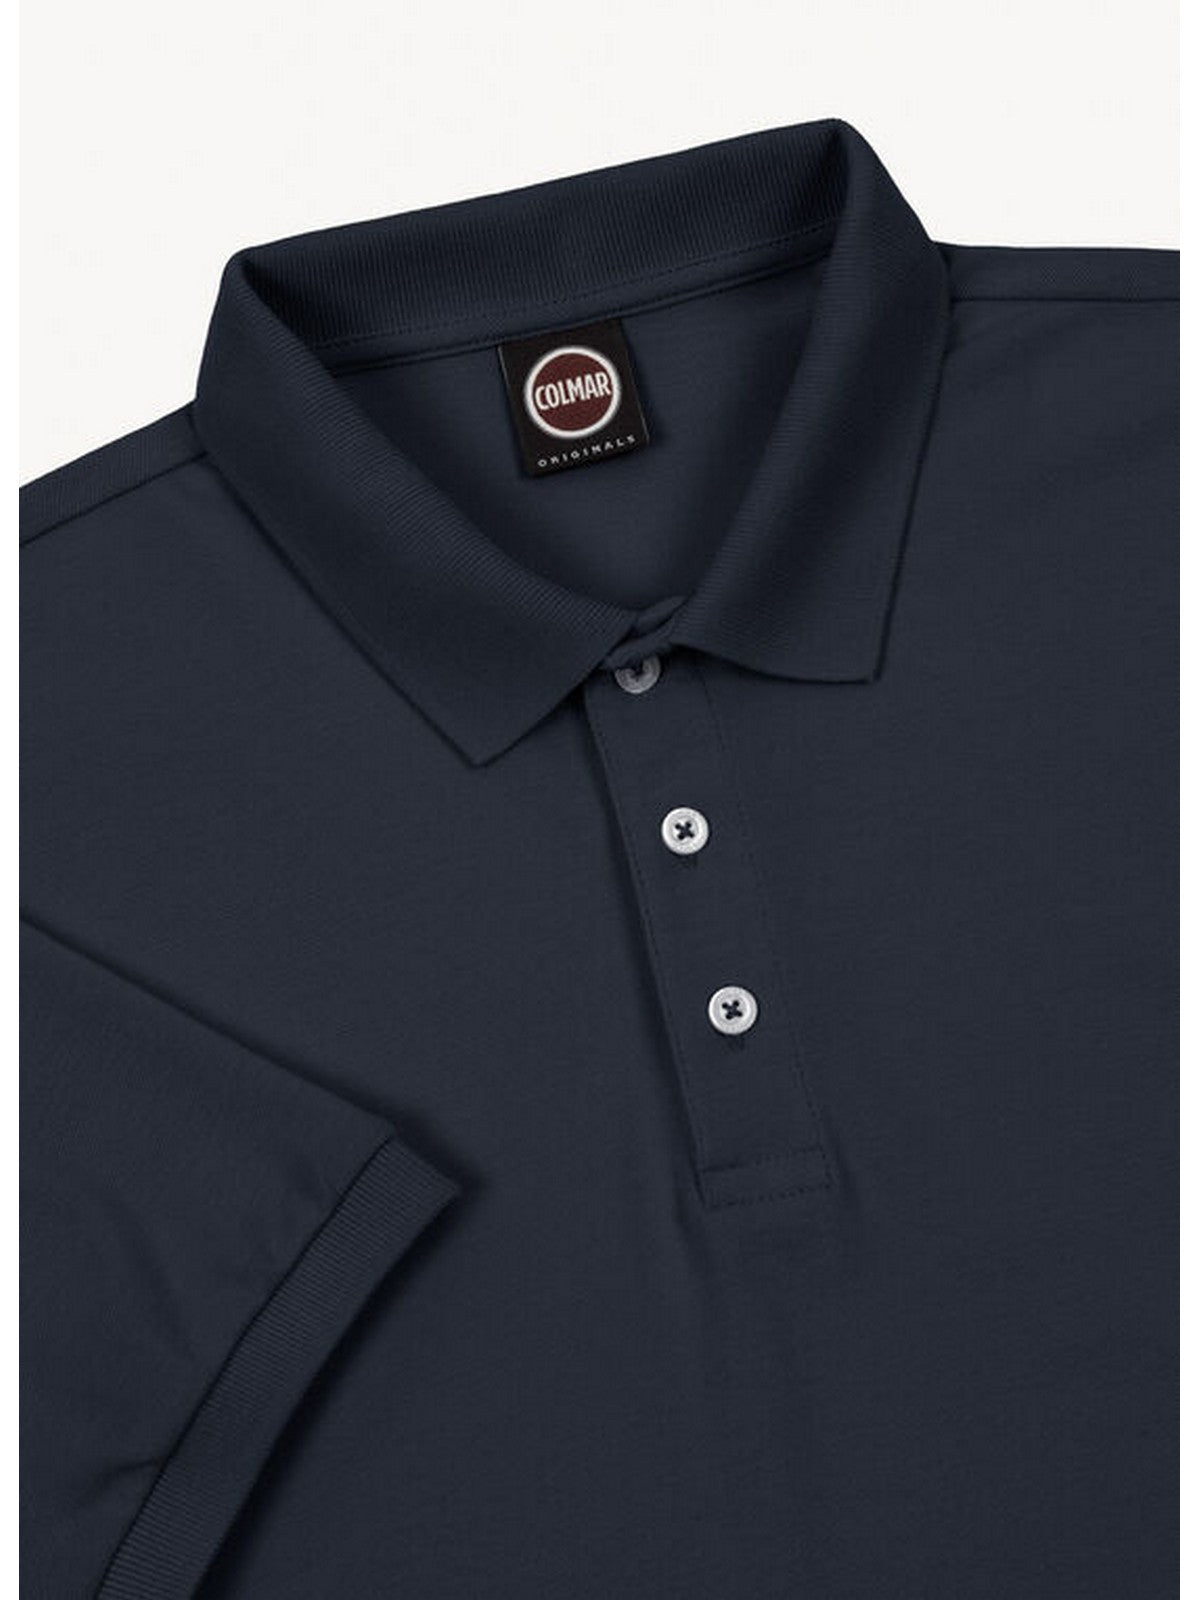 COLMAR T-Shirt e Polo Uomo  7646 4SH 68 Blu